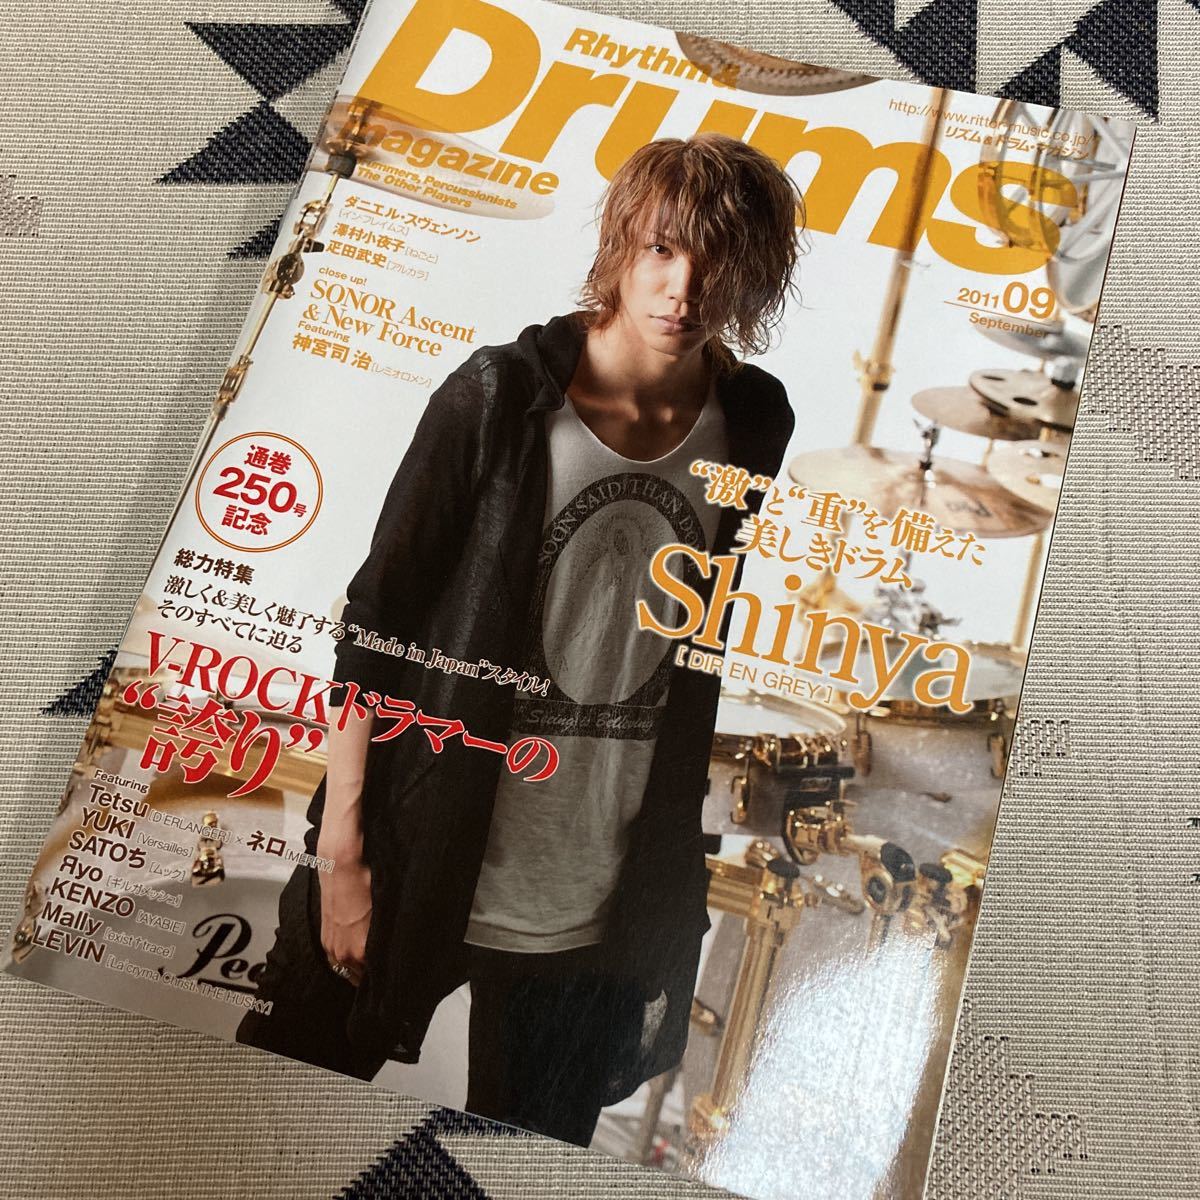 Rhythm & Drums magazine ( ритм and барабан журнал ) 2011 год 09 месяц номер shinya]